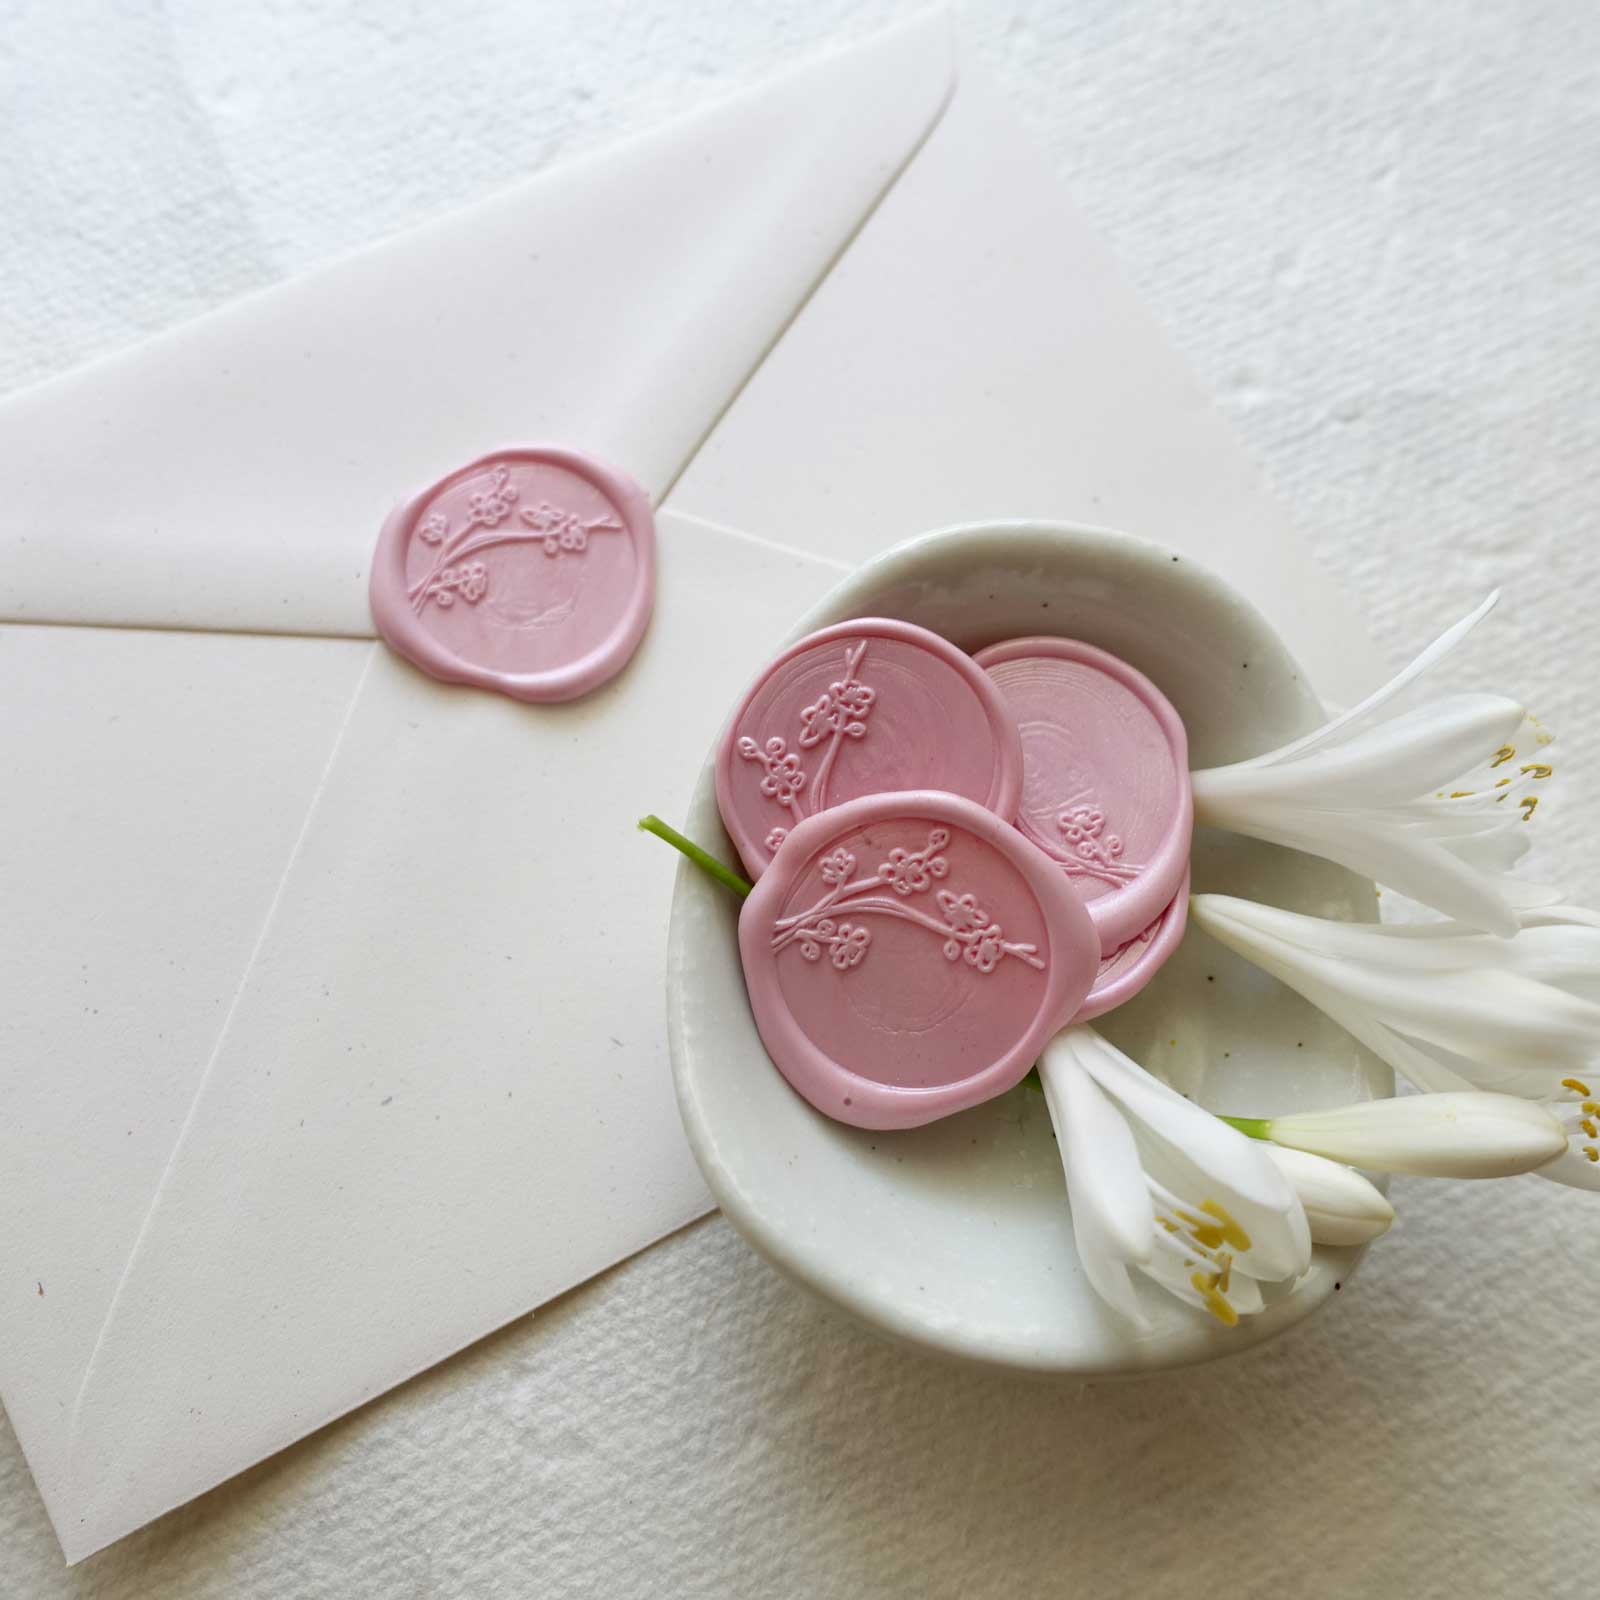 Cherry blossom pink wax seals